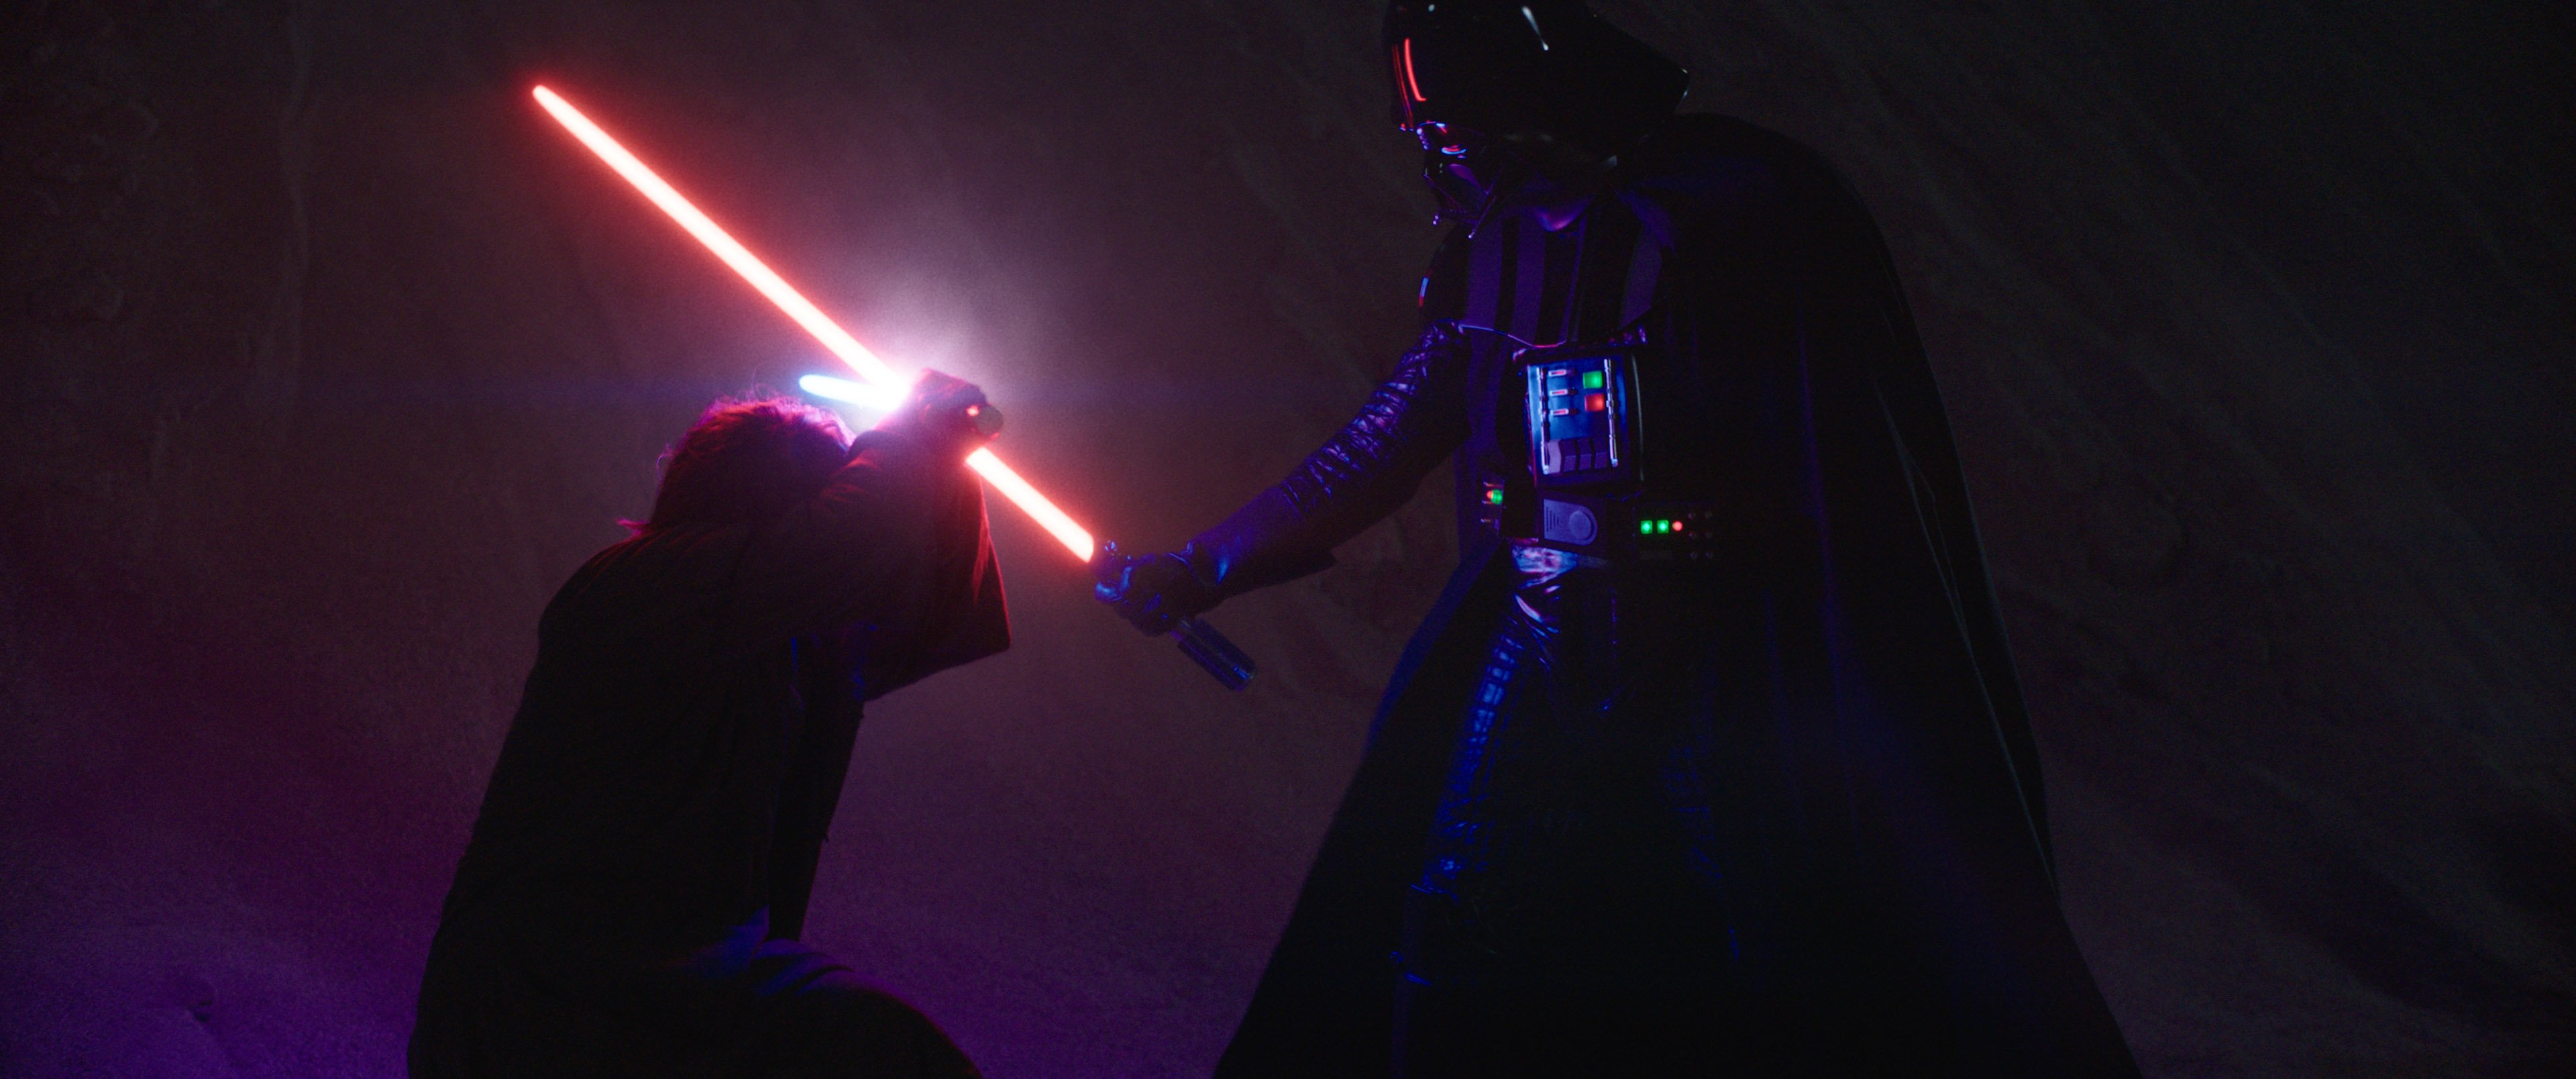 Obi-Wan Kenobi and Darth Vader reprise their lightsaber duel in the Obi-Wan Star Wars series